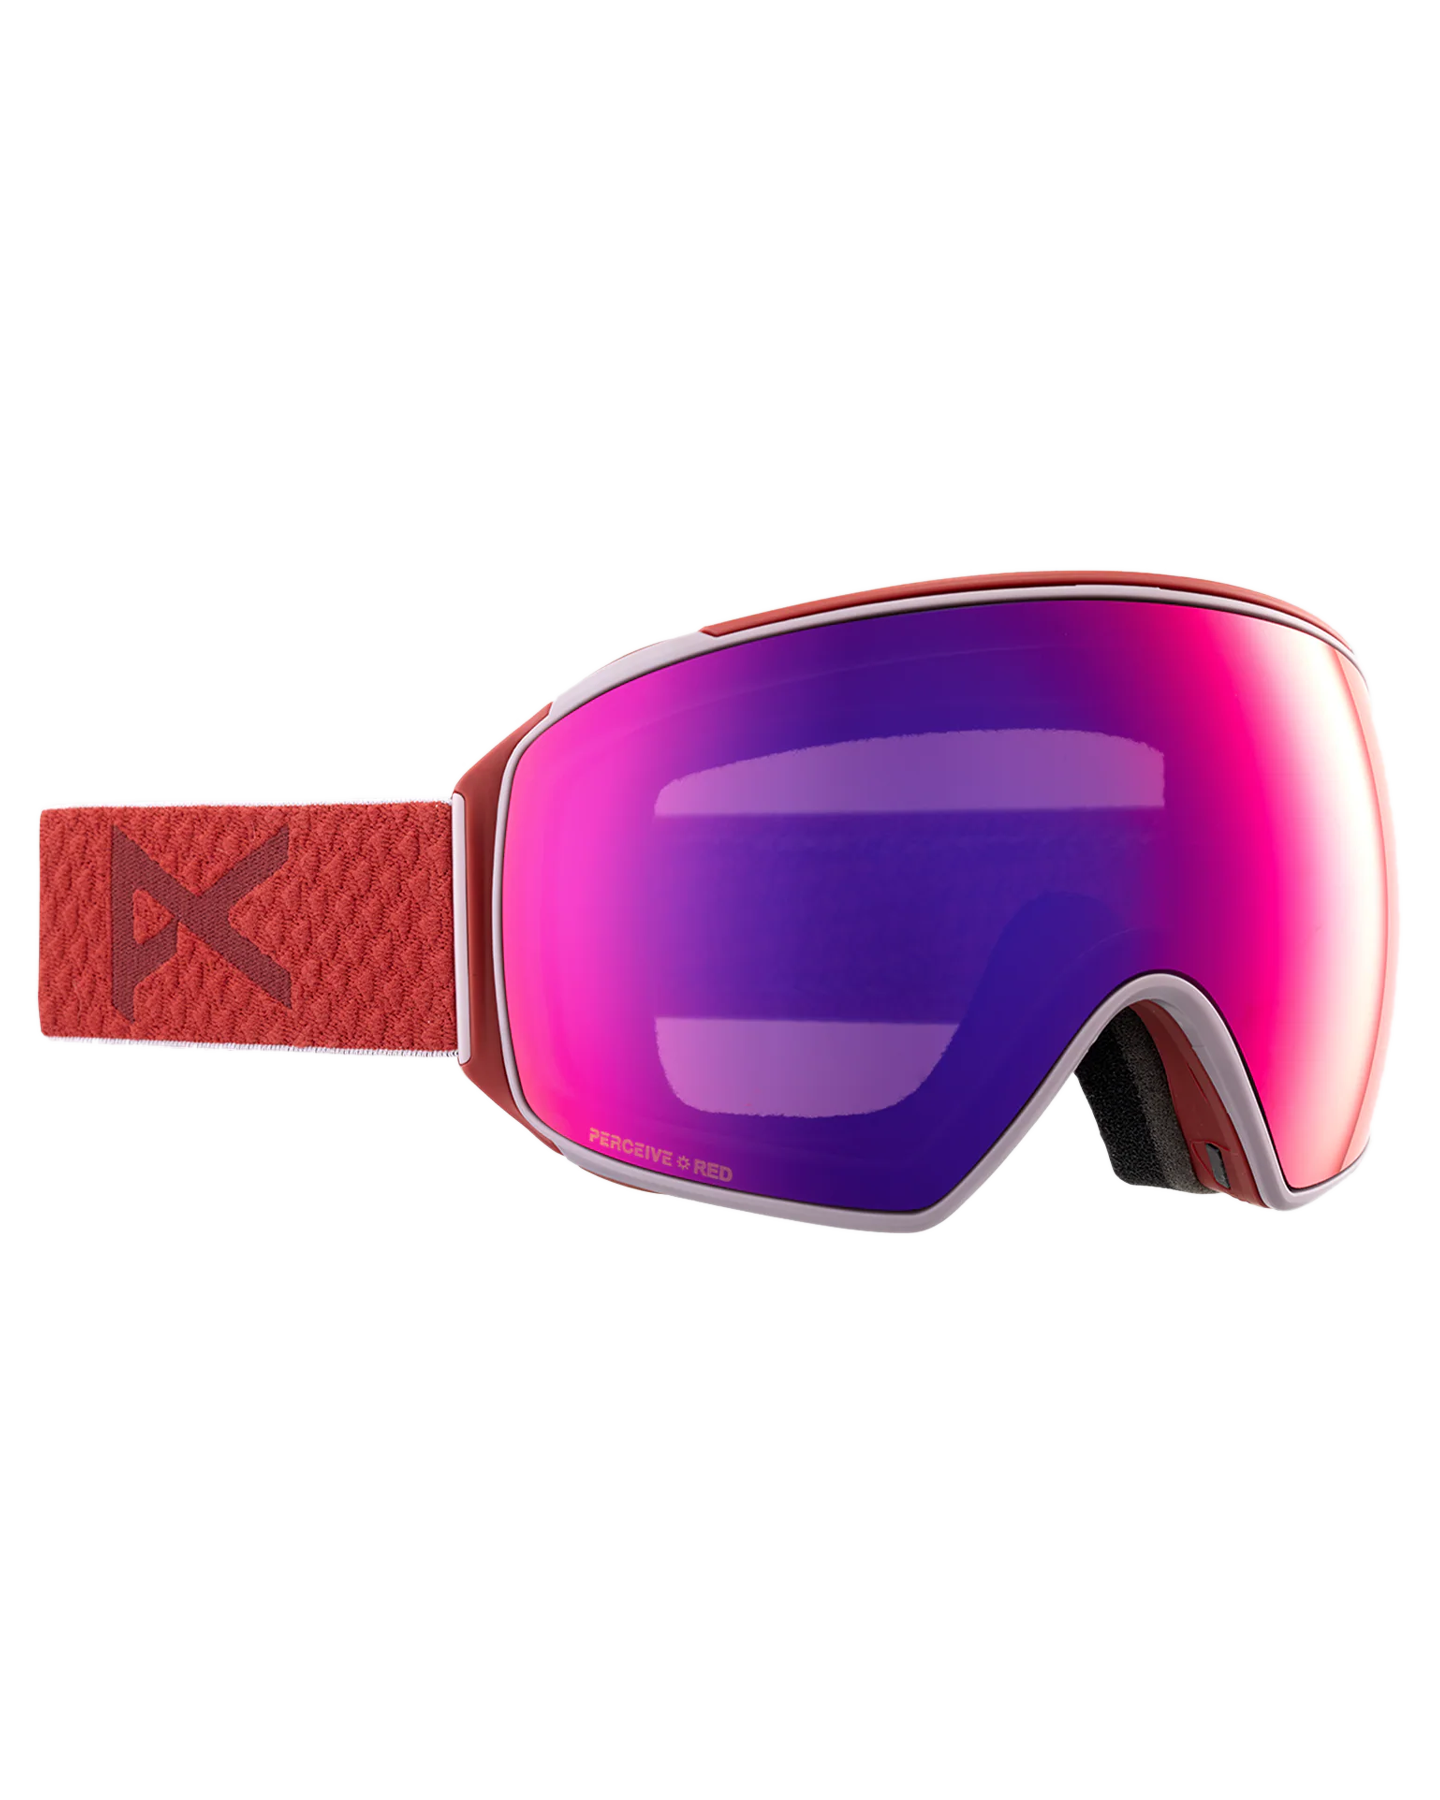 Anon M4 Toric Snow Goggles + Bonus Lens + Mfi® Face Mask - Mars/Perceive Sunny Red Lens Snow Goggles - Mens - Trojan Wake Ski Snow